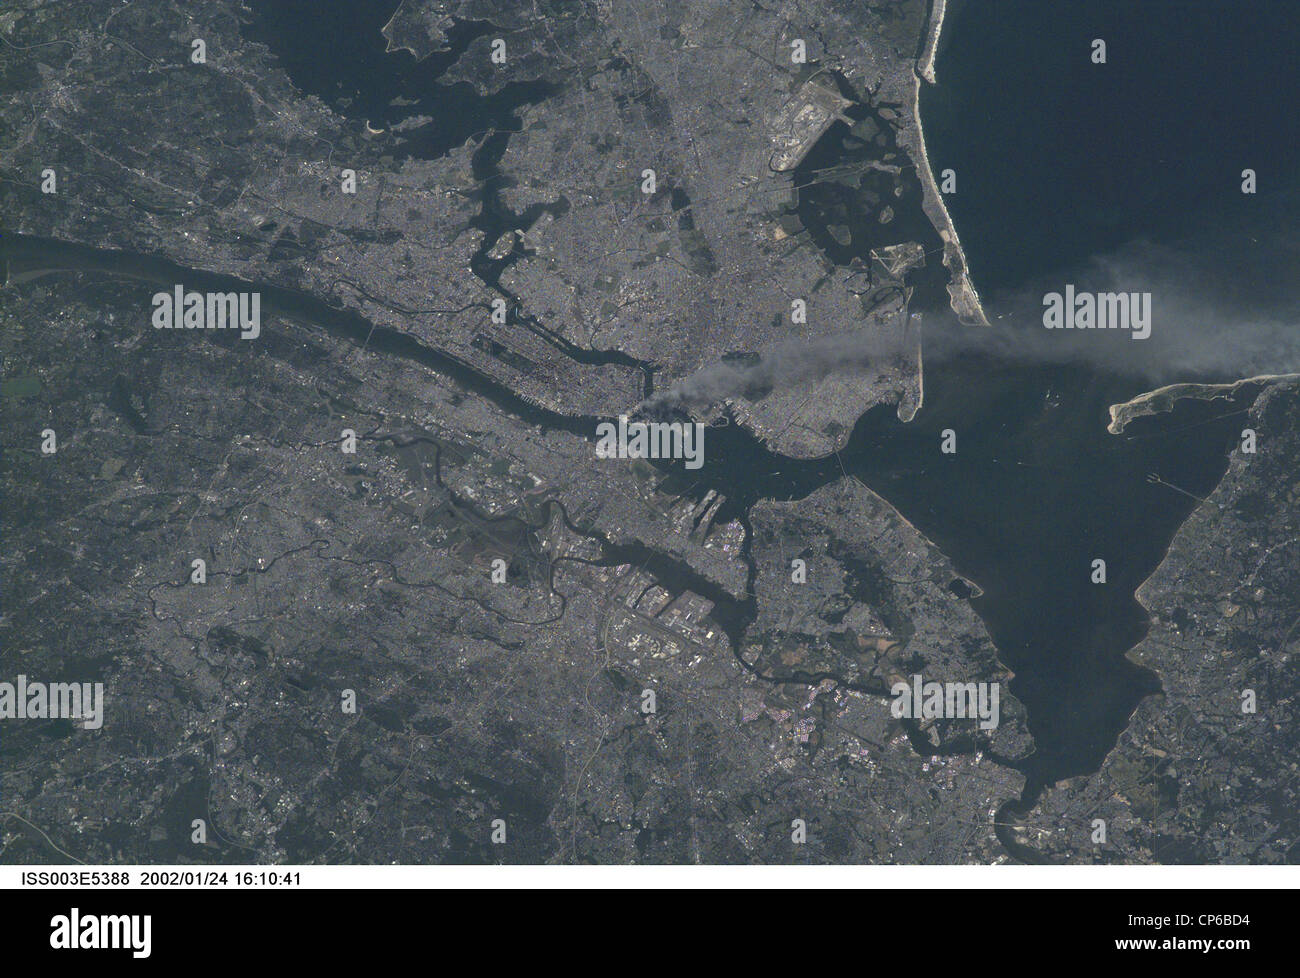 Manhattan smoke plume on September 11, 2001 from International Space Station Stock Photo